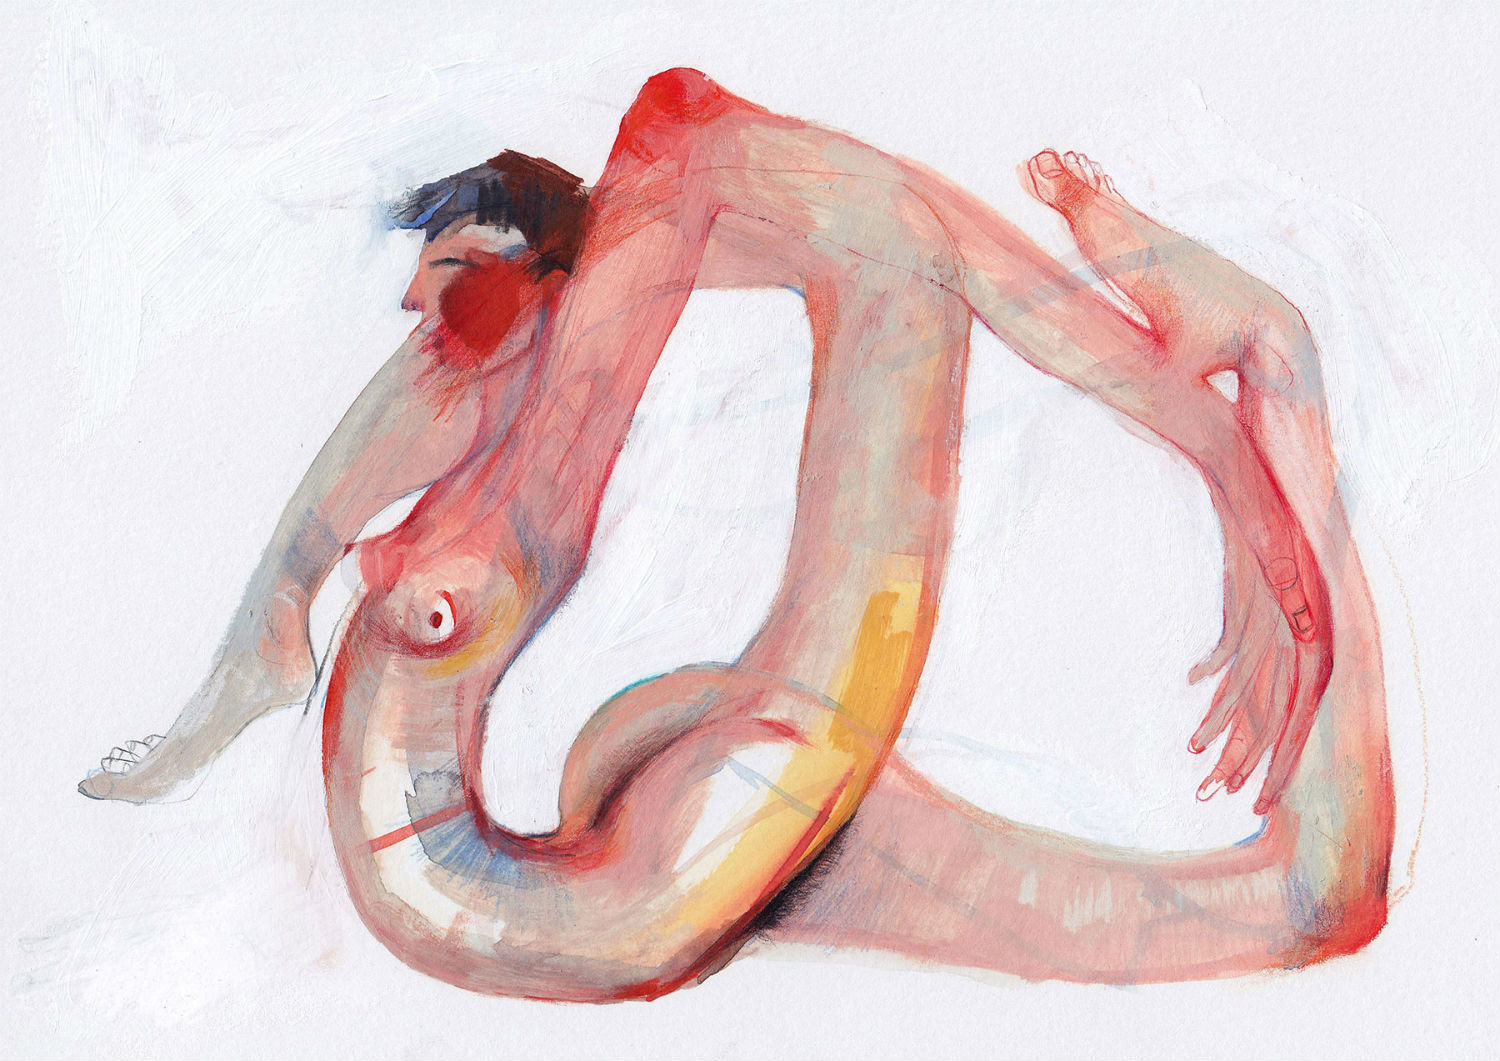 Marina González Eme nude painting body shape abstract 